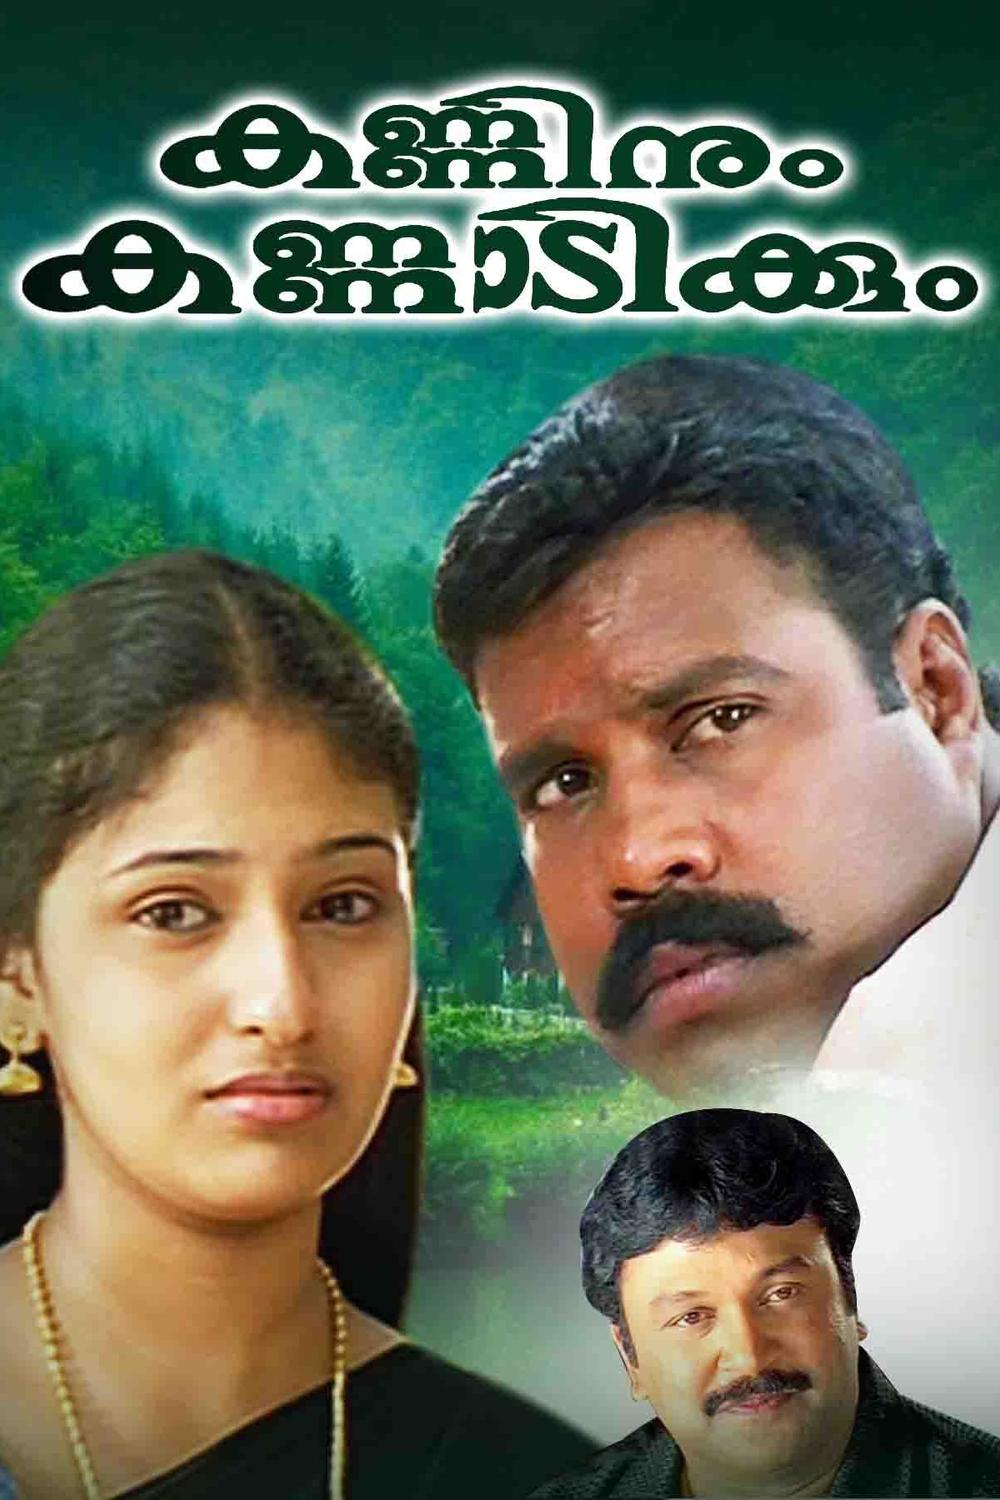 Online My Hero Mythri Malayalam Movies My Hero Mythri Malayalam Movies Live